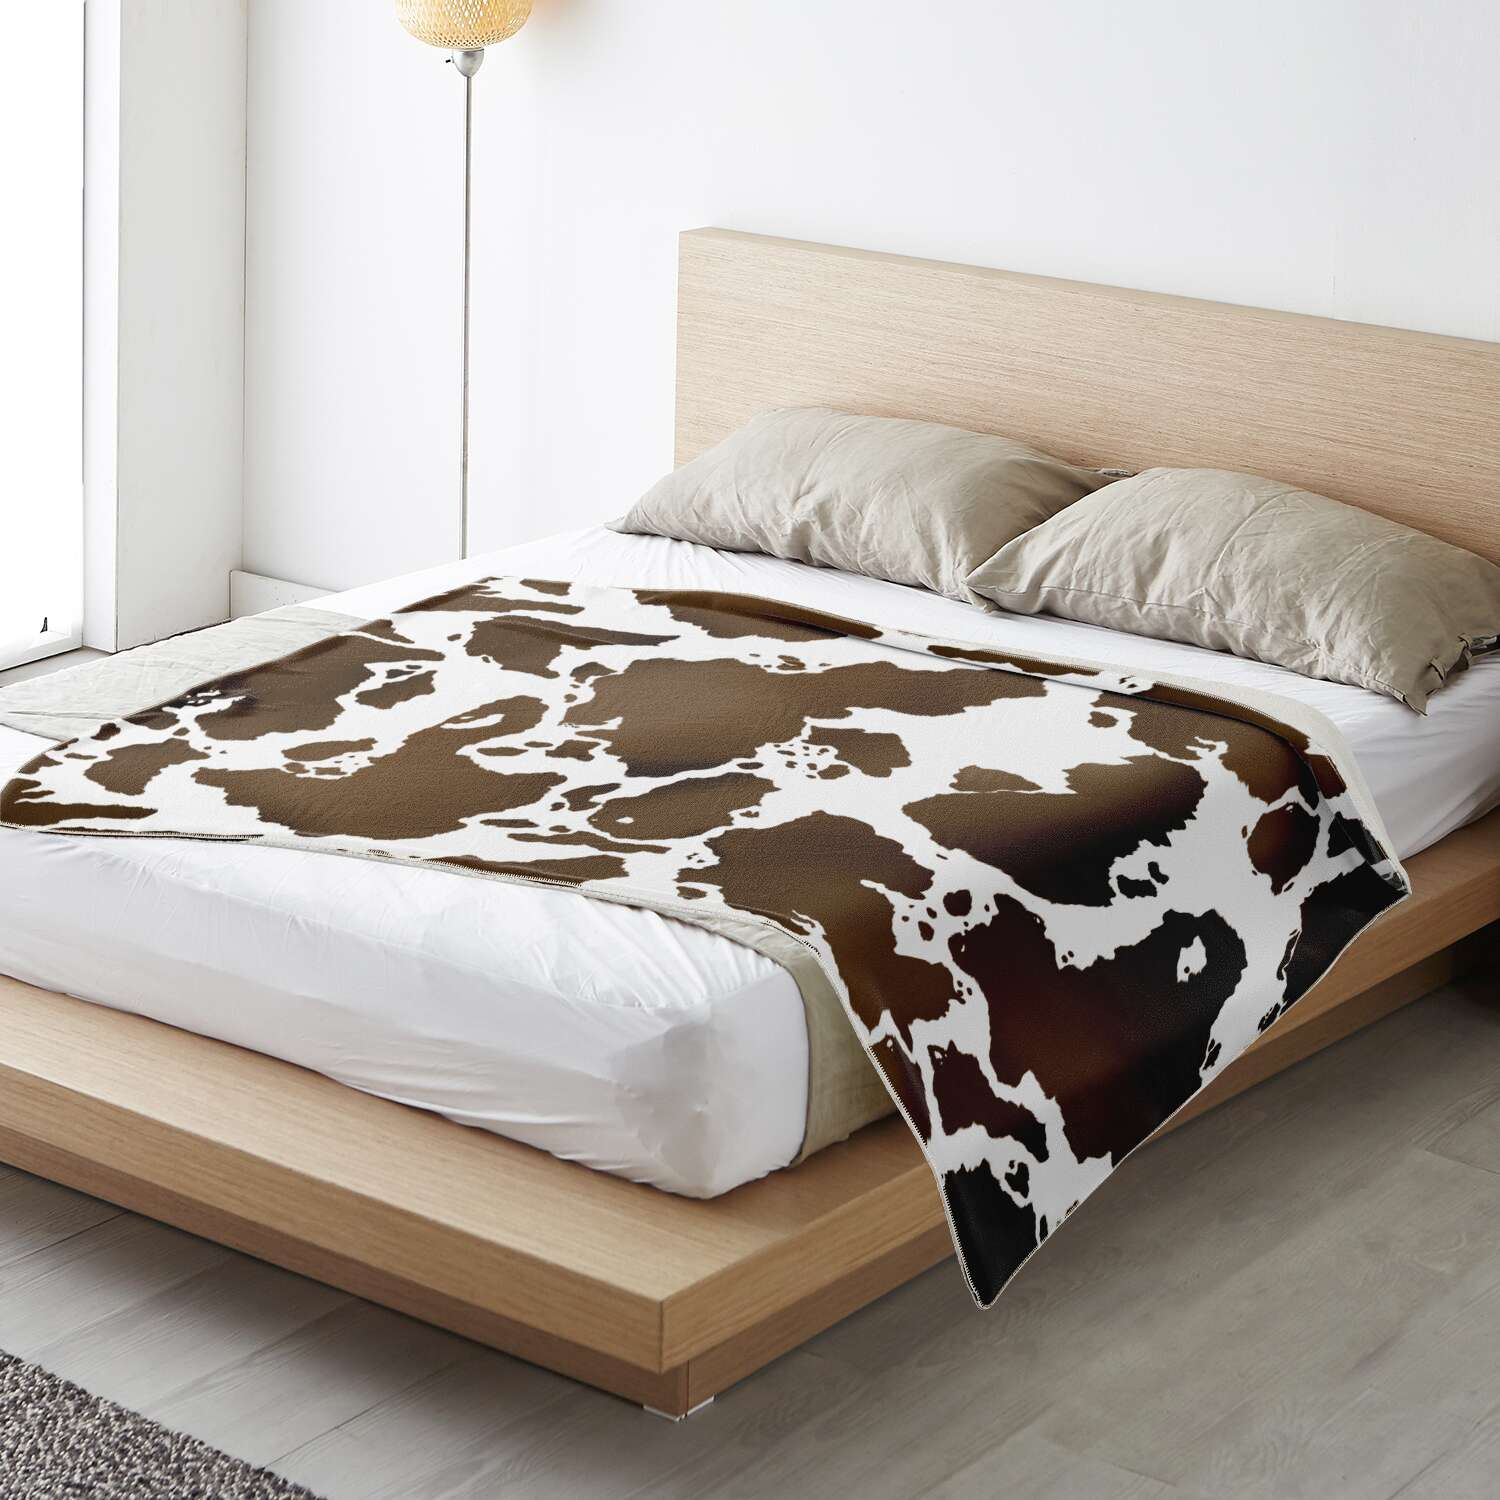 941ad918cc2fd8b6e15873618eedfad7 blanket horizontal lifestyle bedlarge - The Cow Print